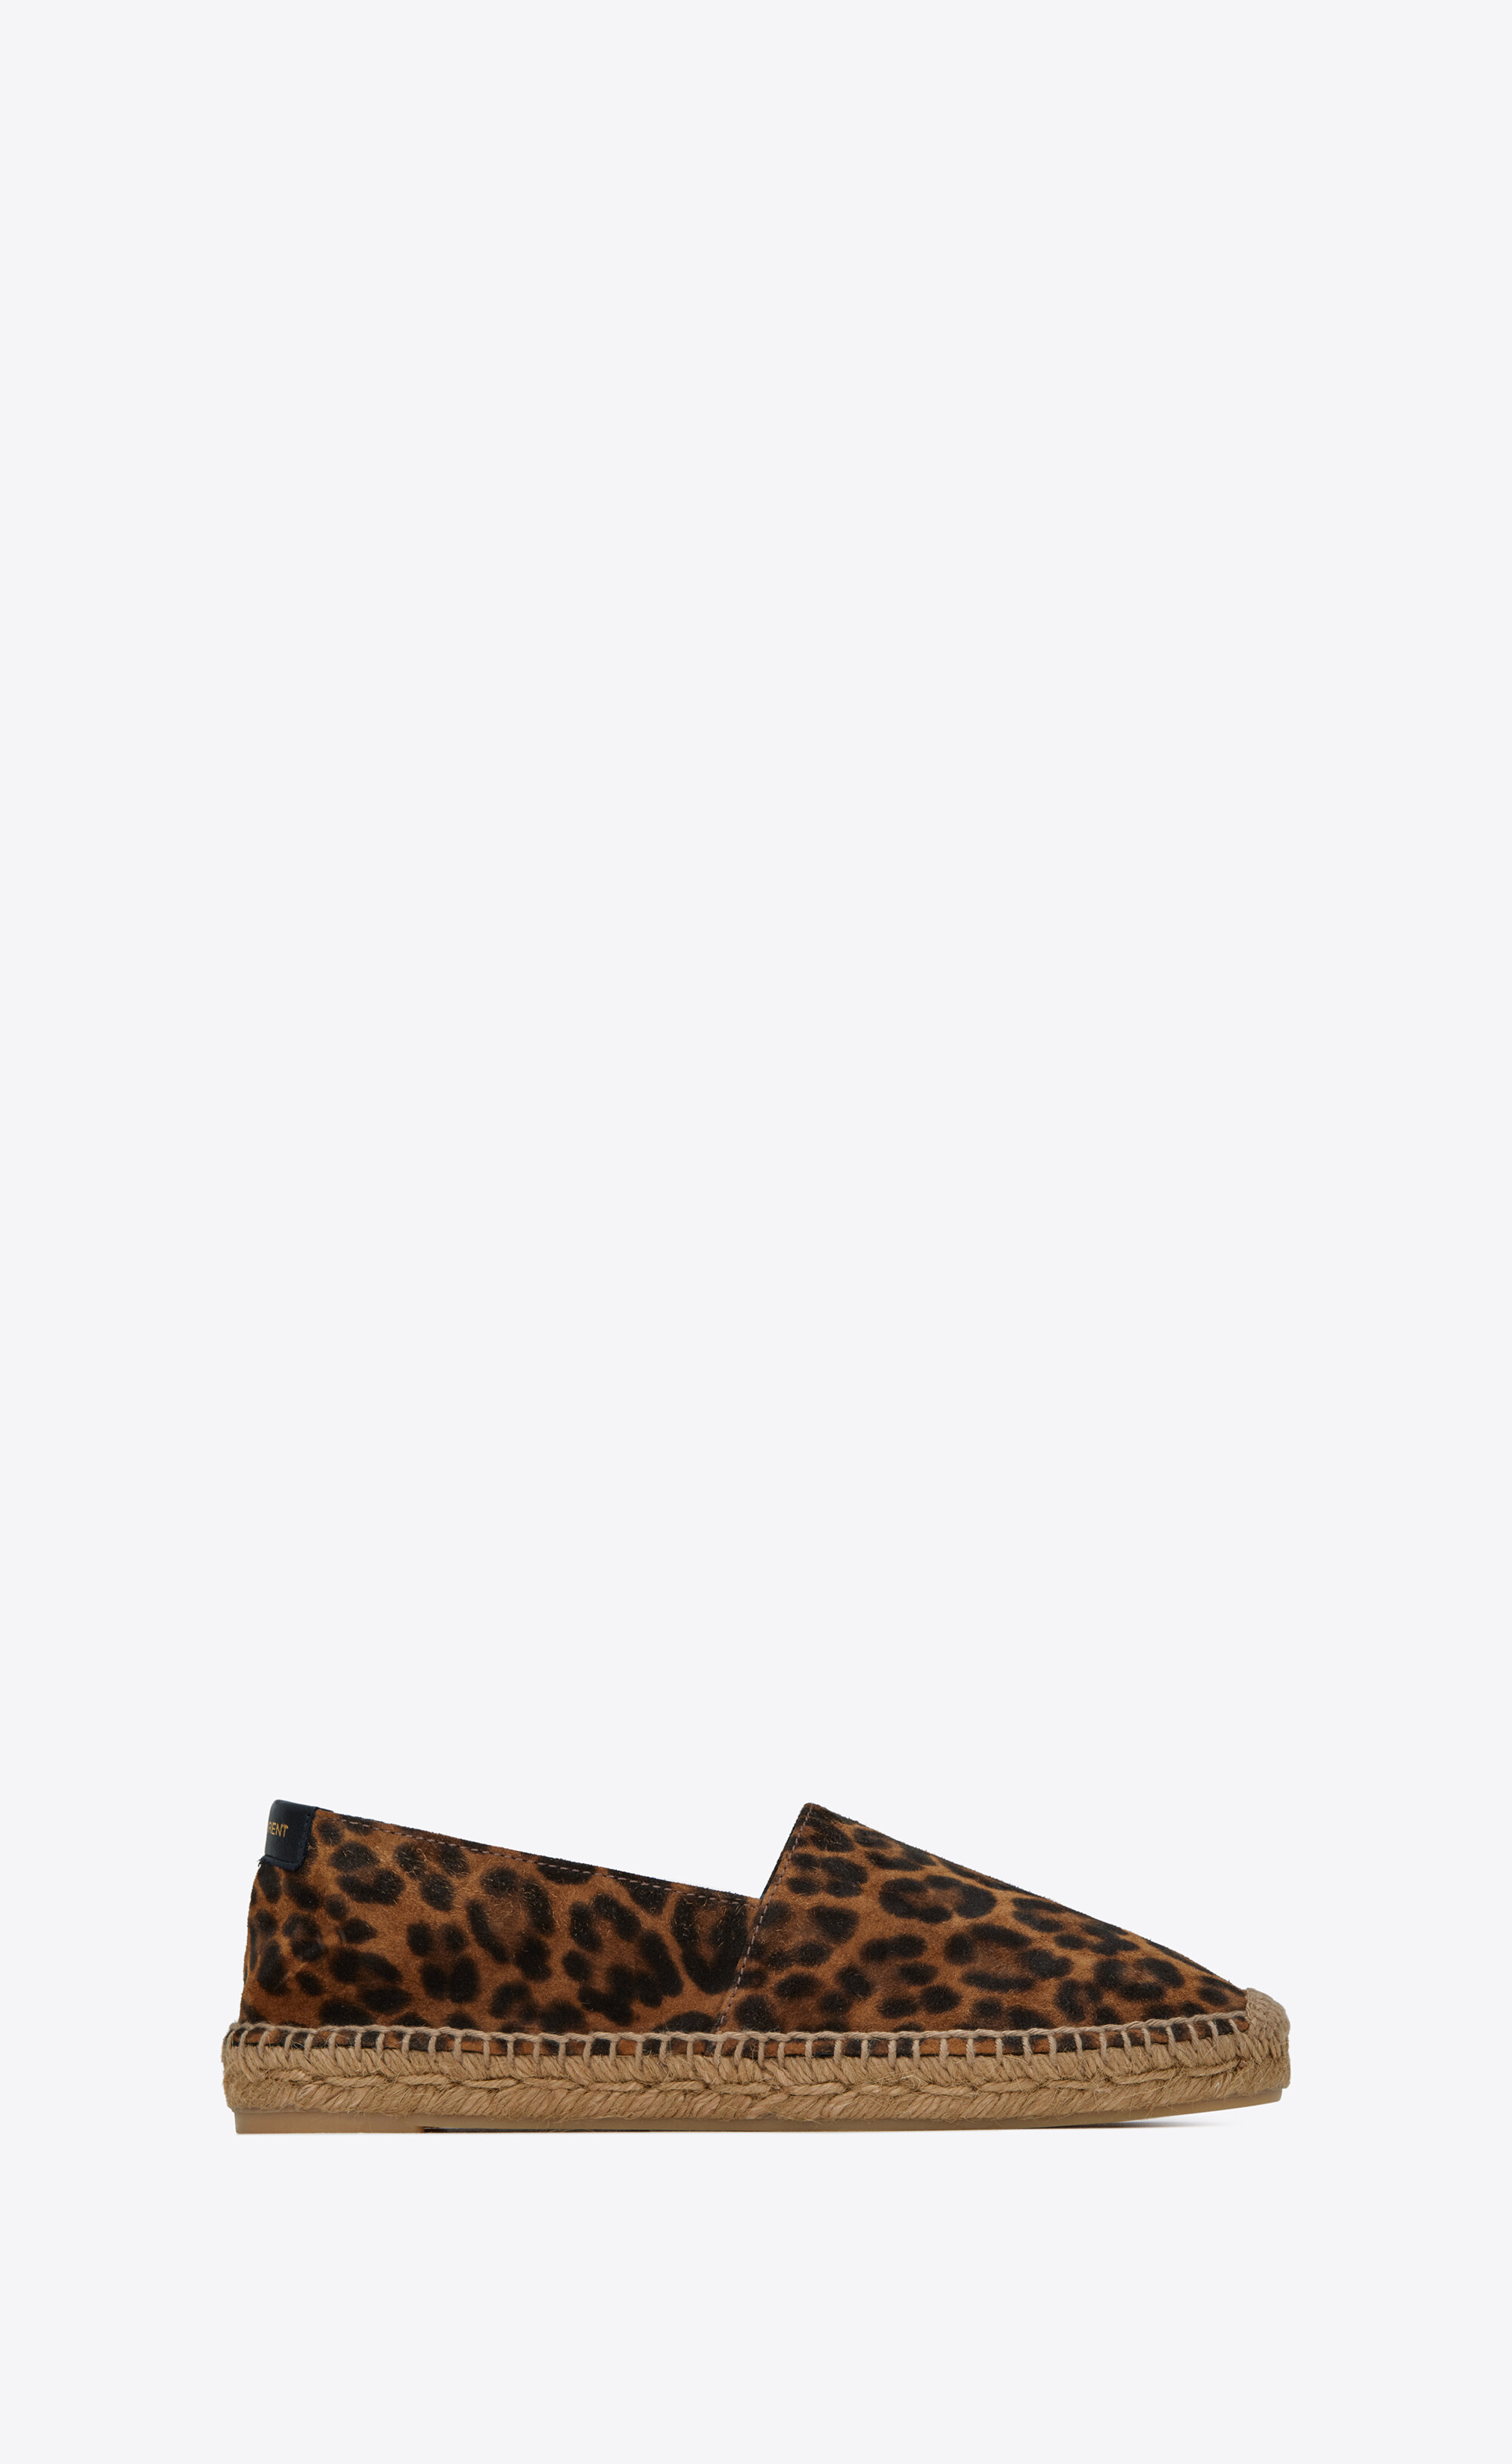 ysl cheetah shoes